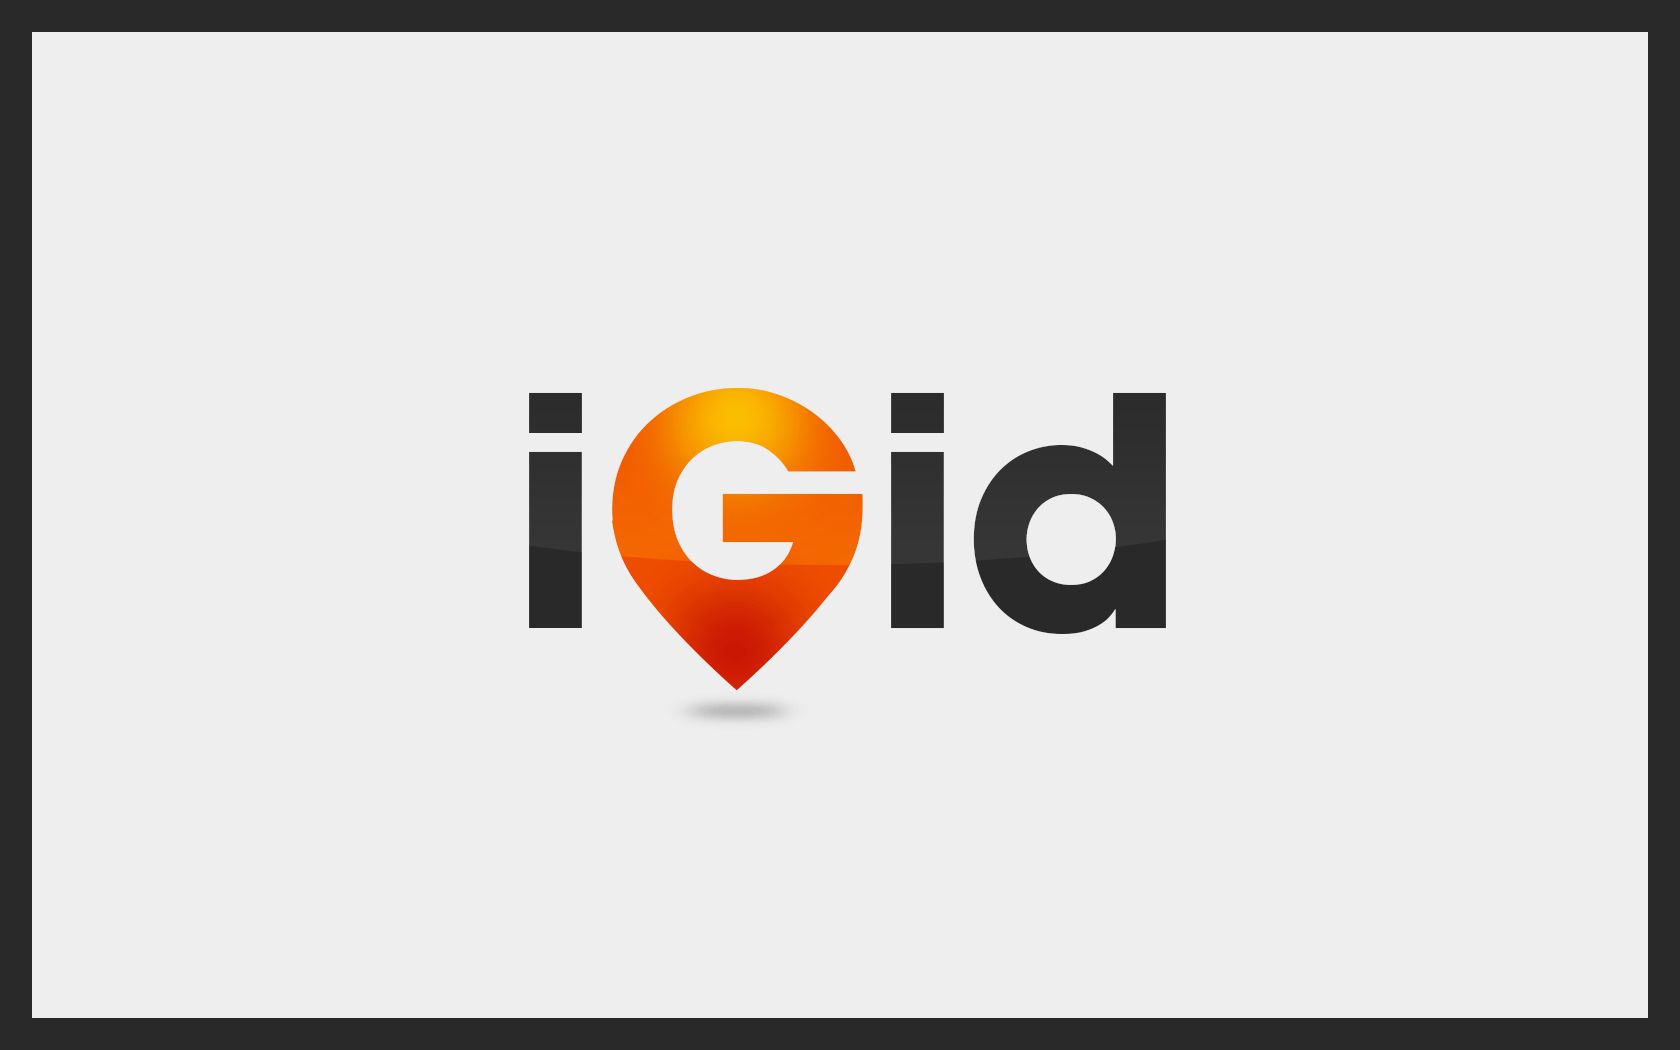 Создание логотипа iGid - дизайнер pensero